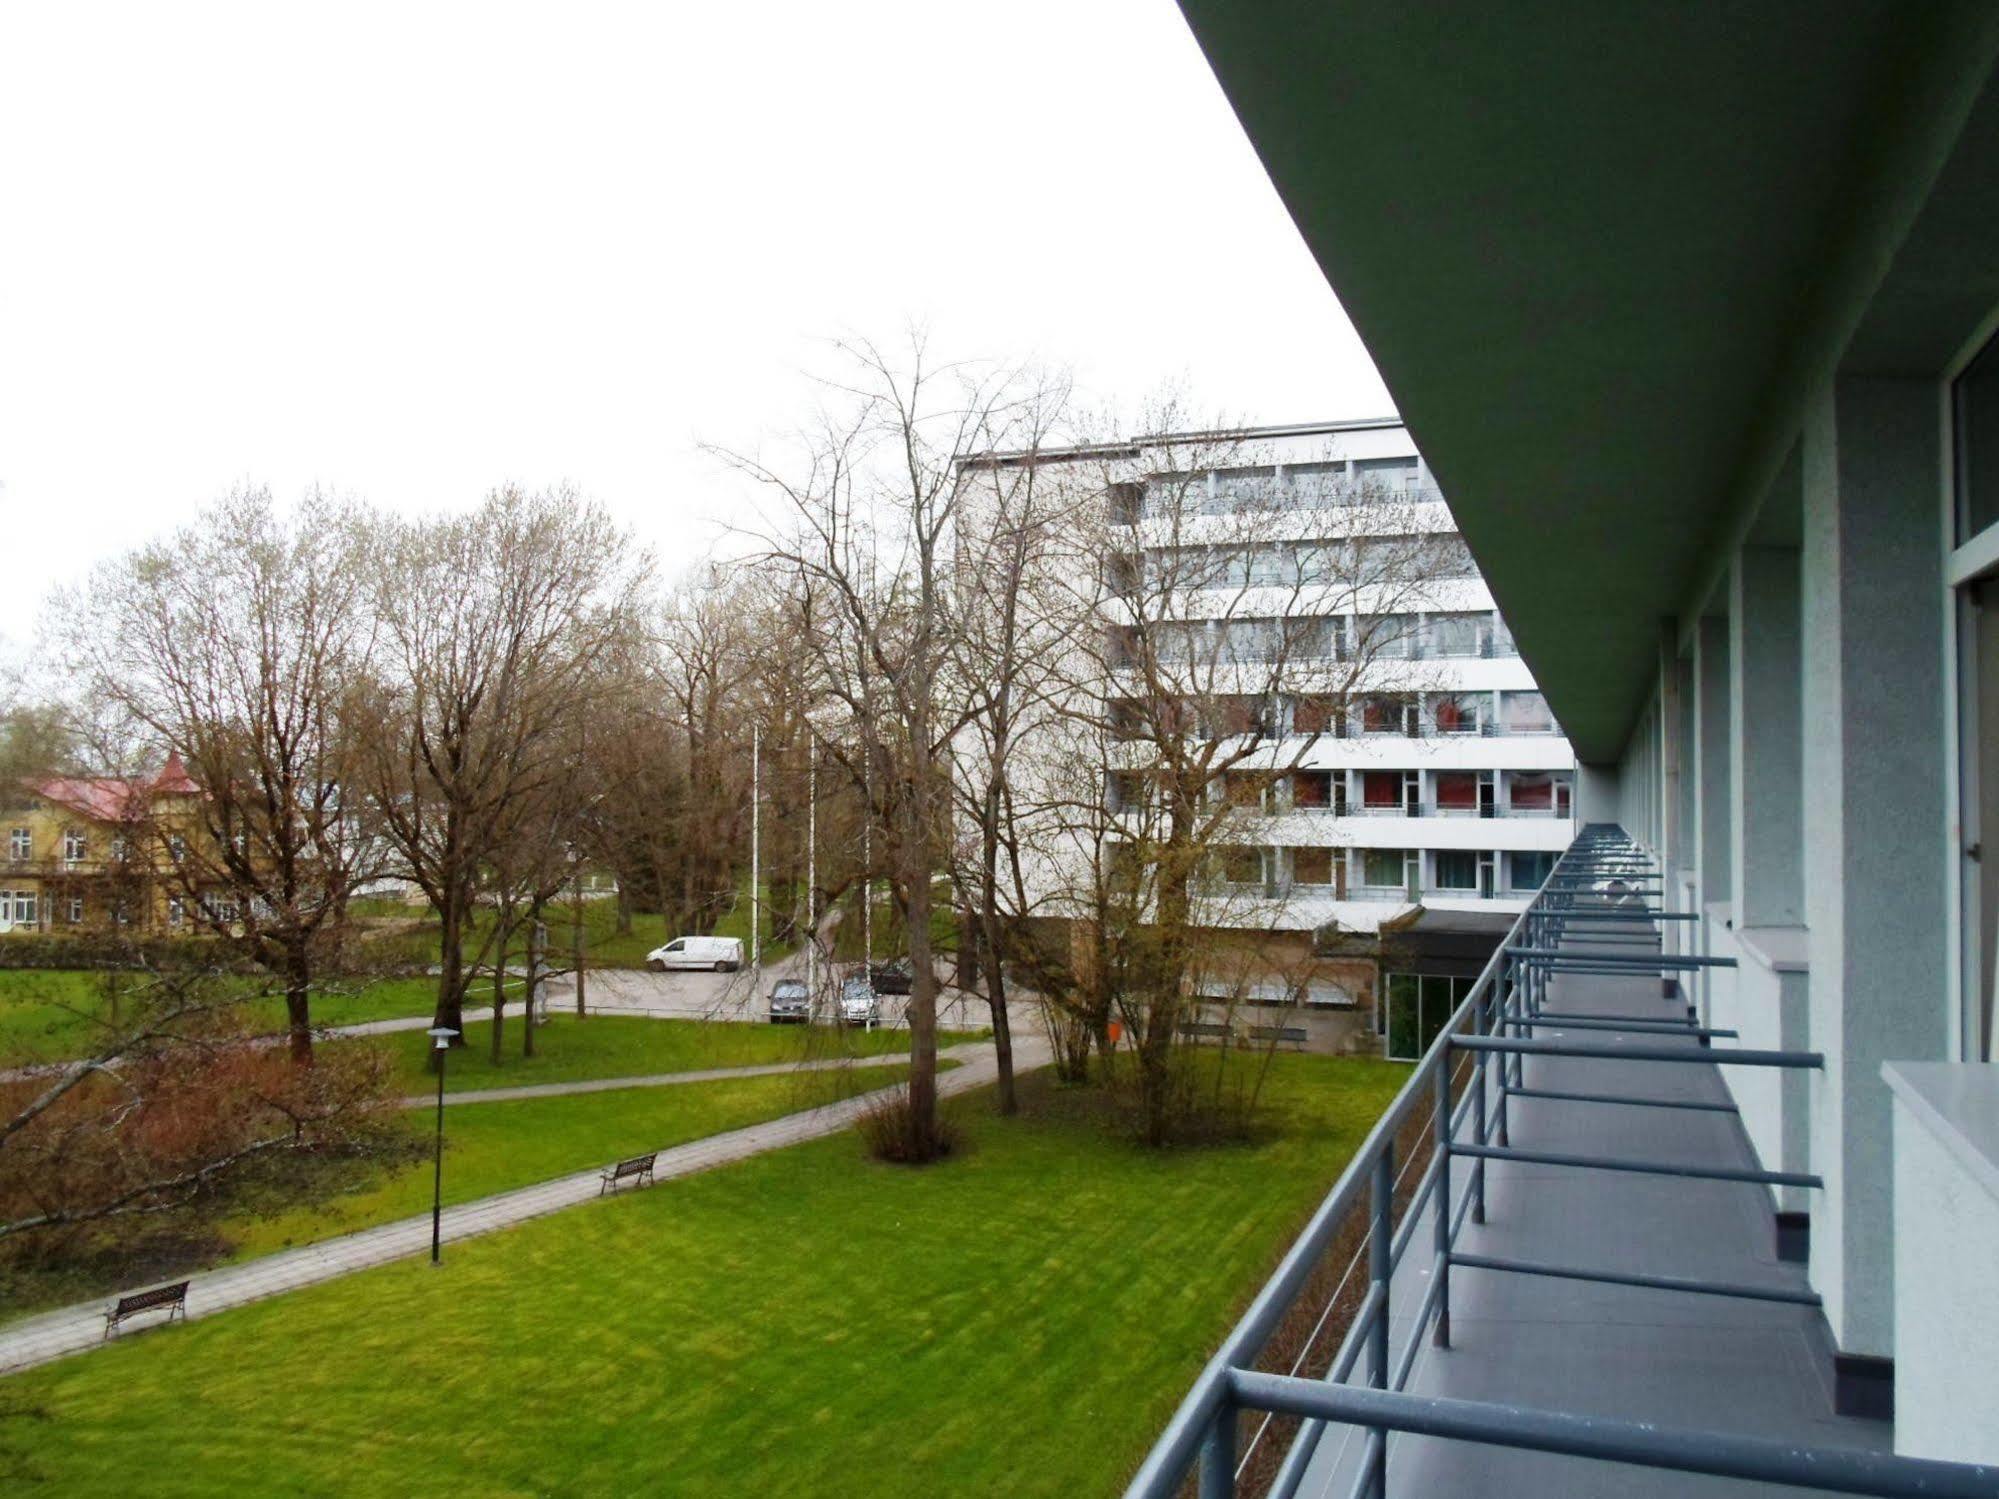 Estonia Medical Spa & Hotel Parnu Exterior photo